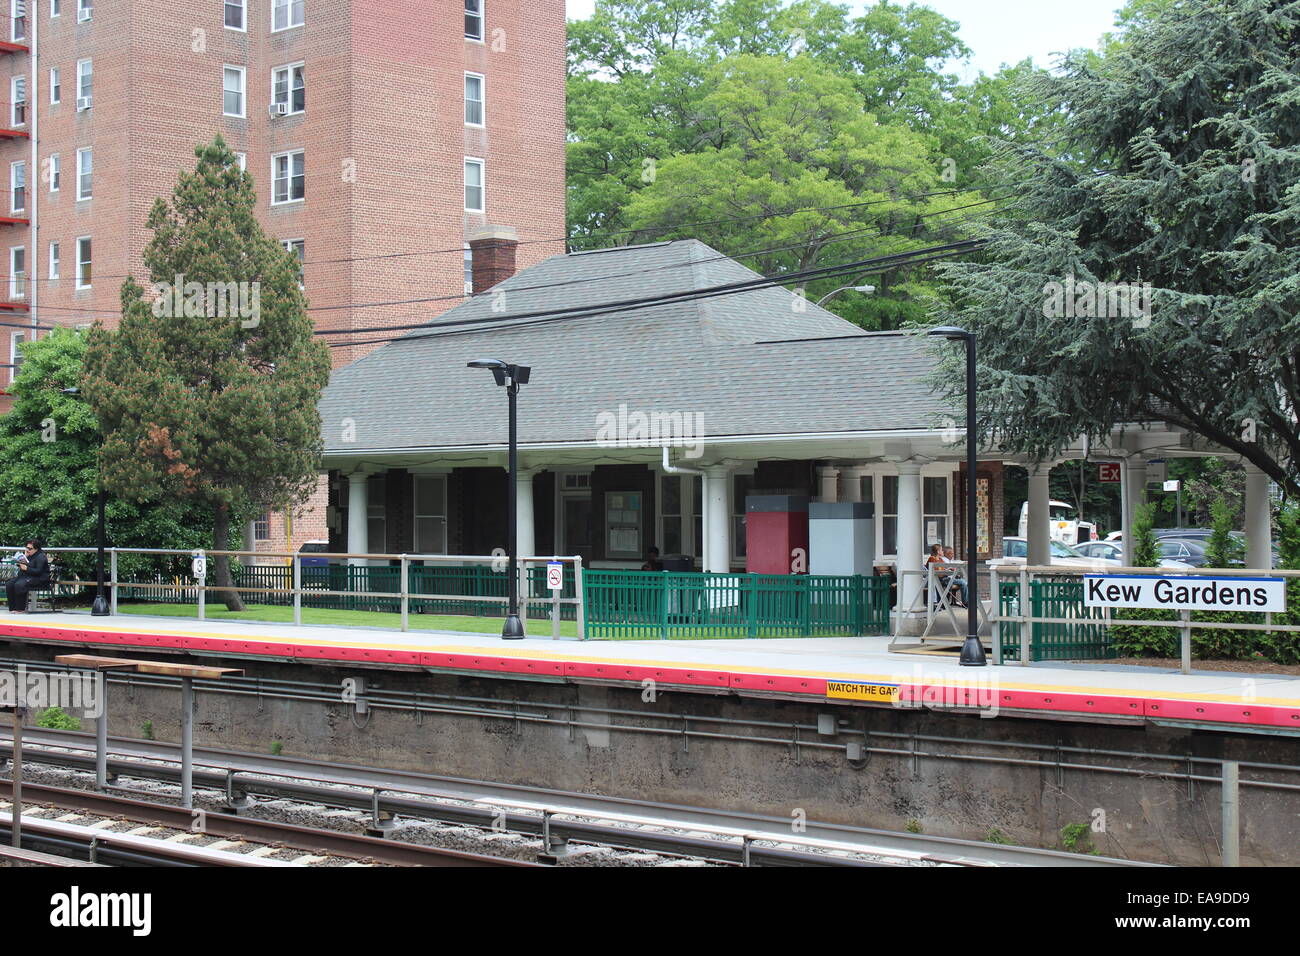 Kew Gardens Long Island Railroad Station, Queens, New York Stockfoto